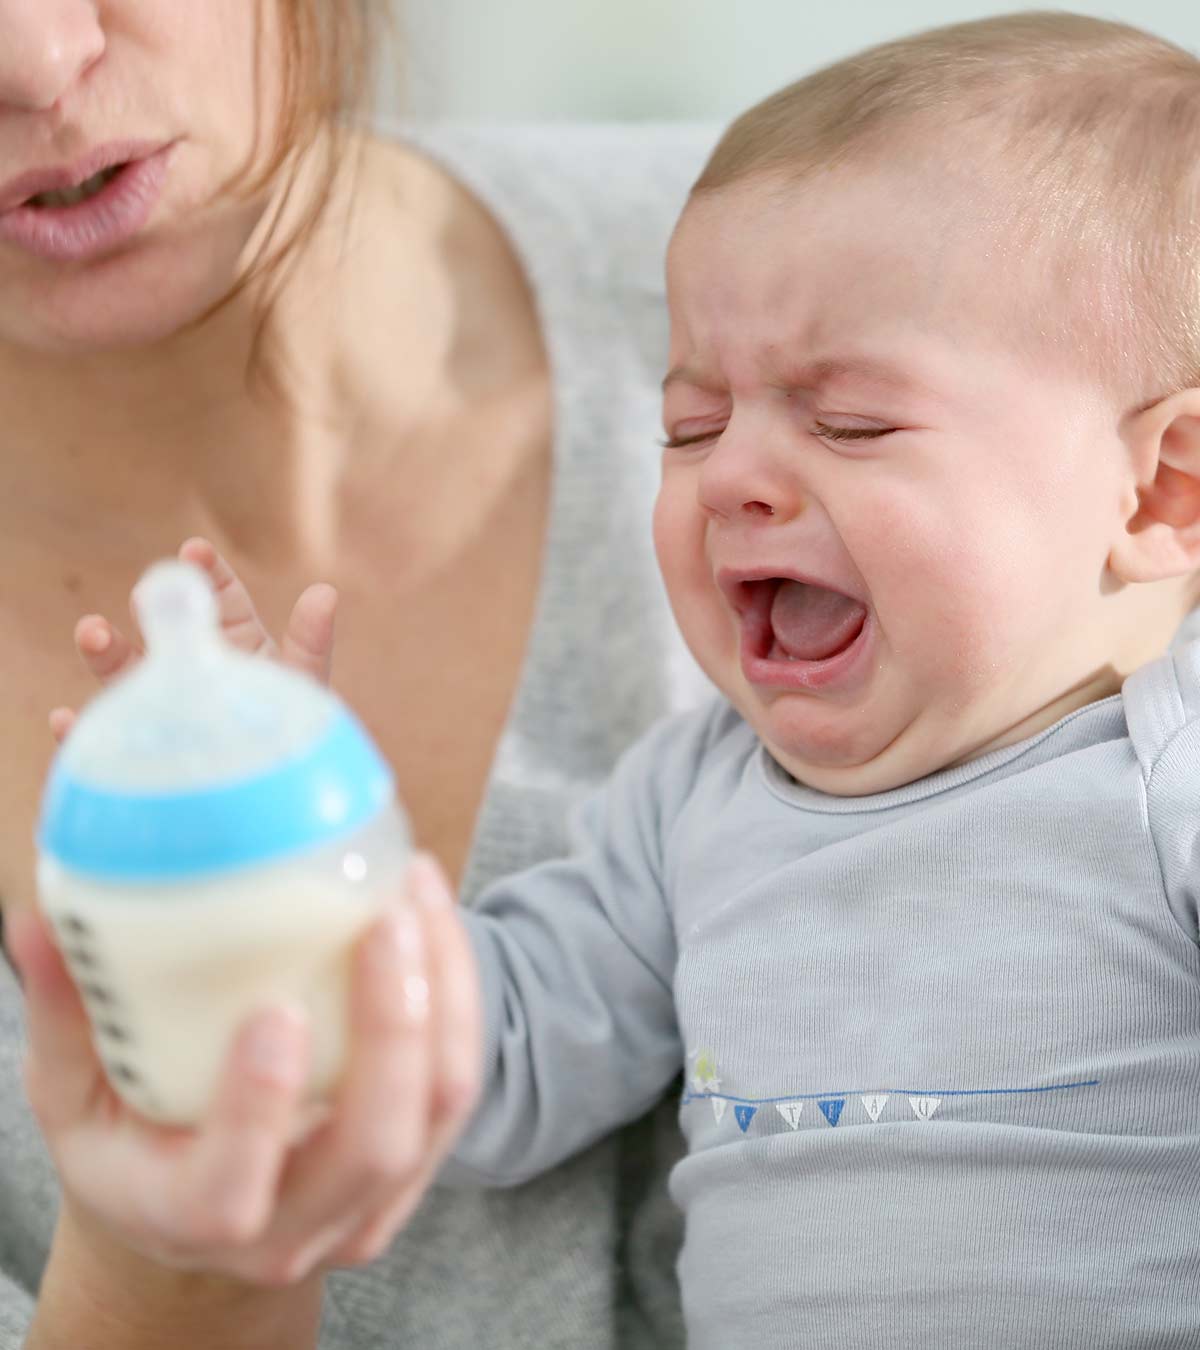 Calcium Deficiency In Babies - Causes, Symptoms & Treatments